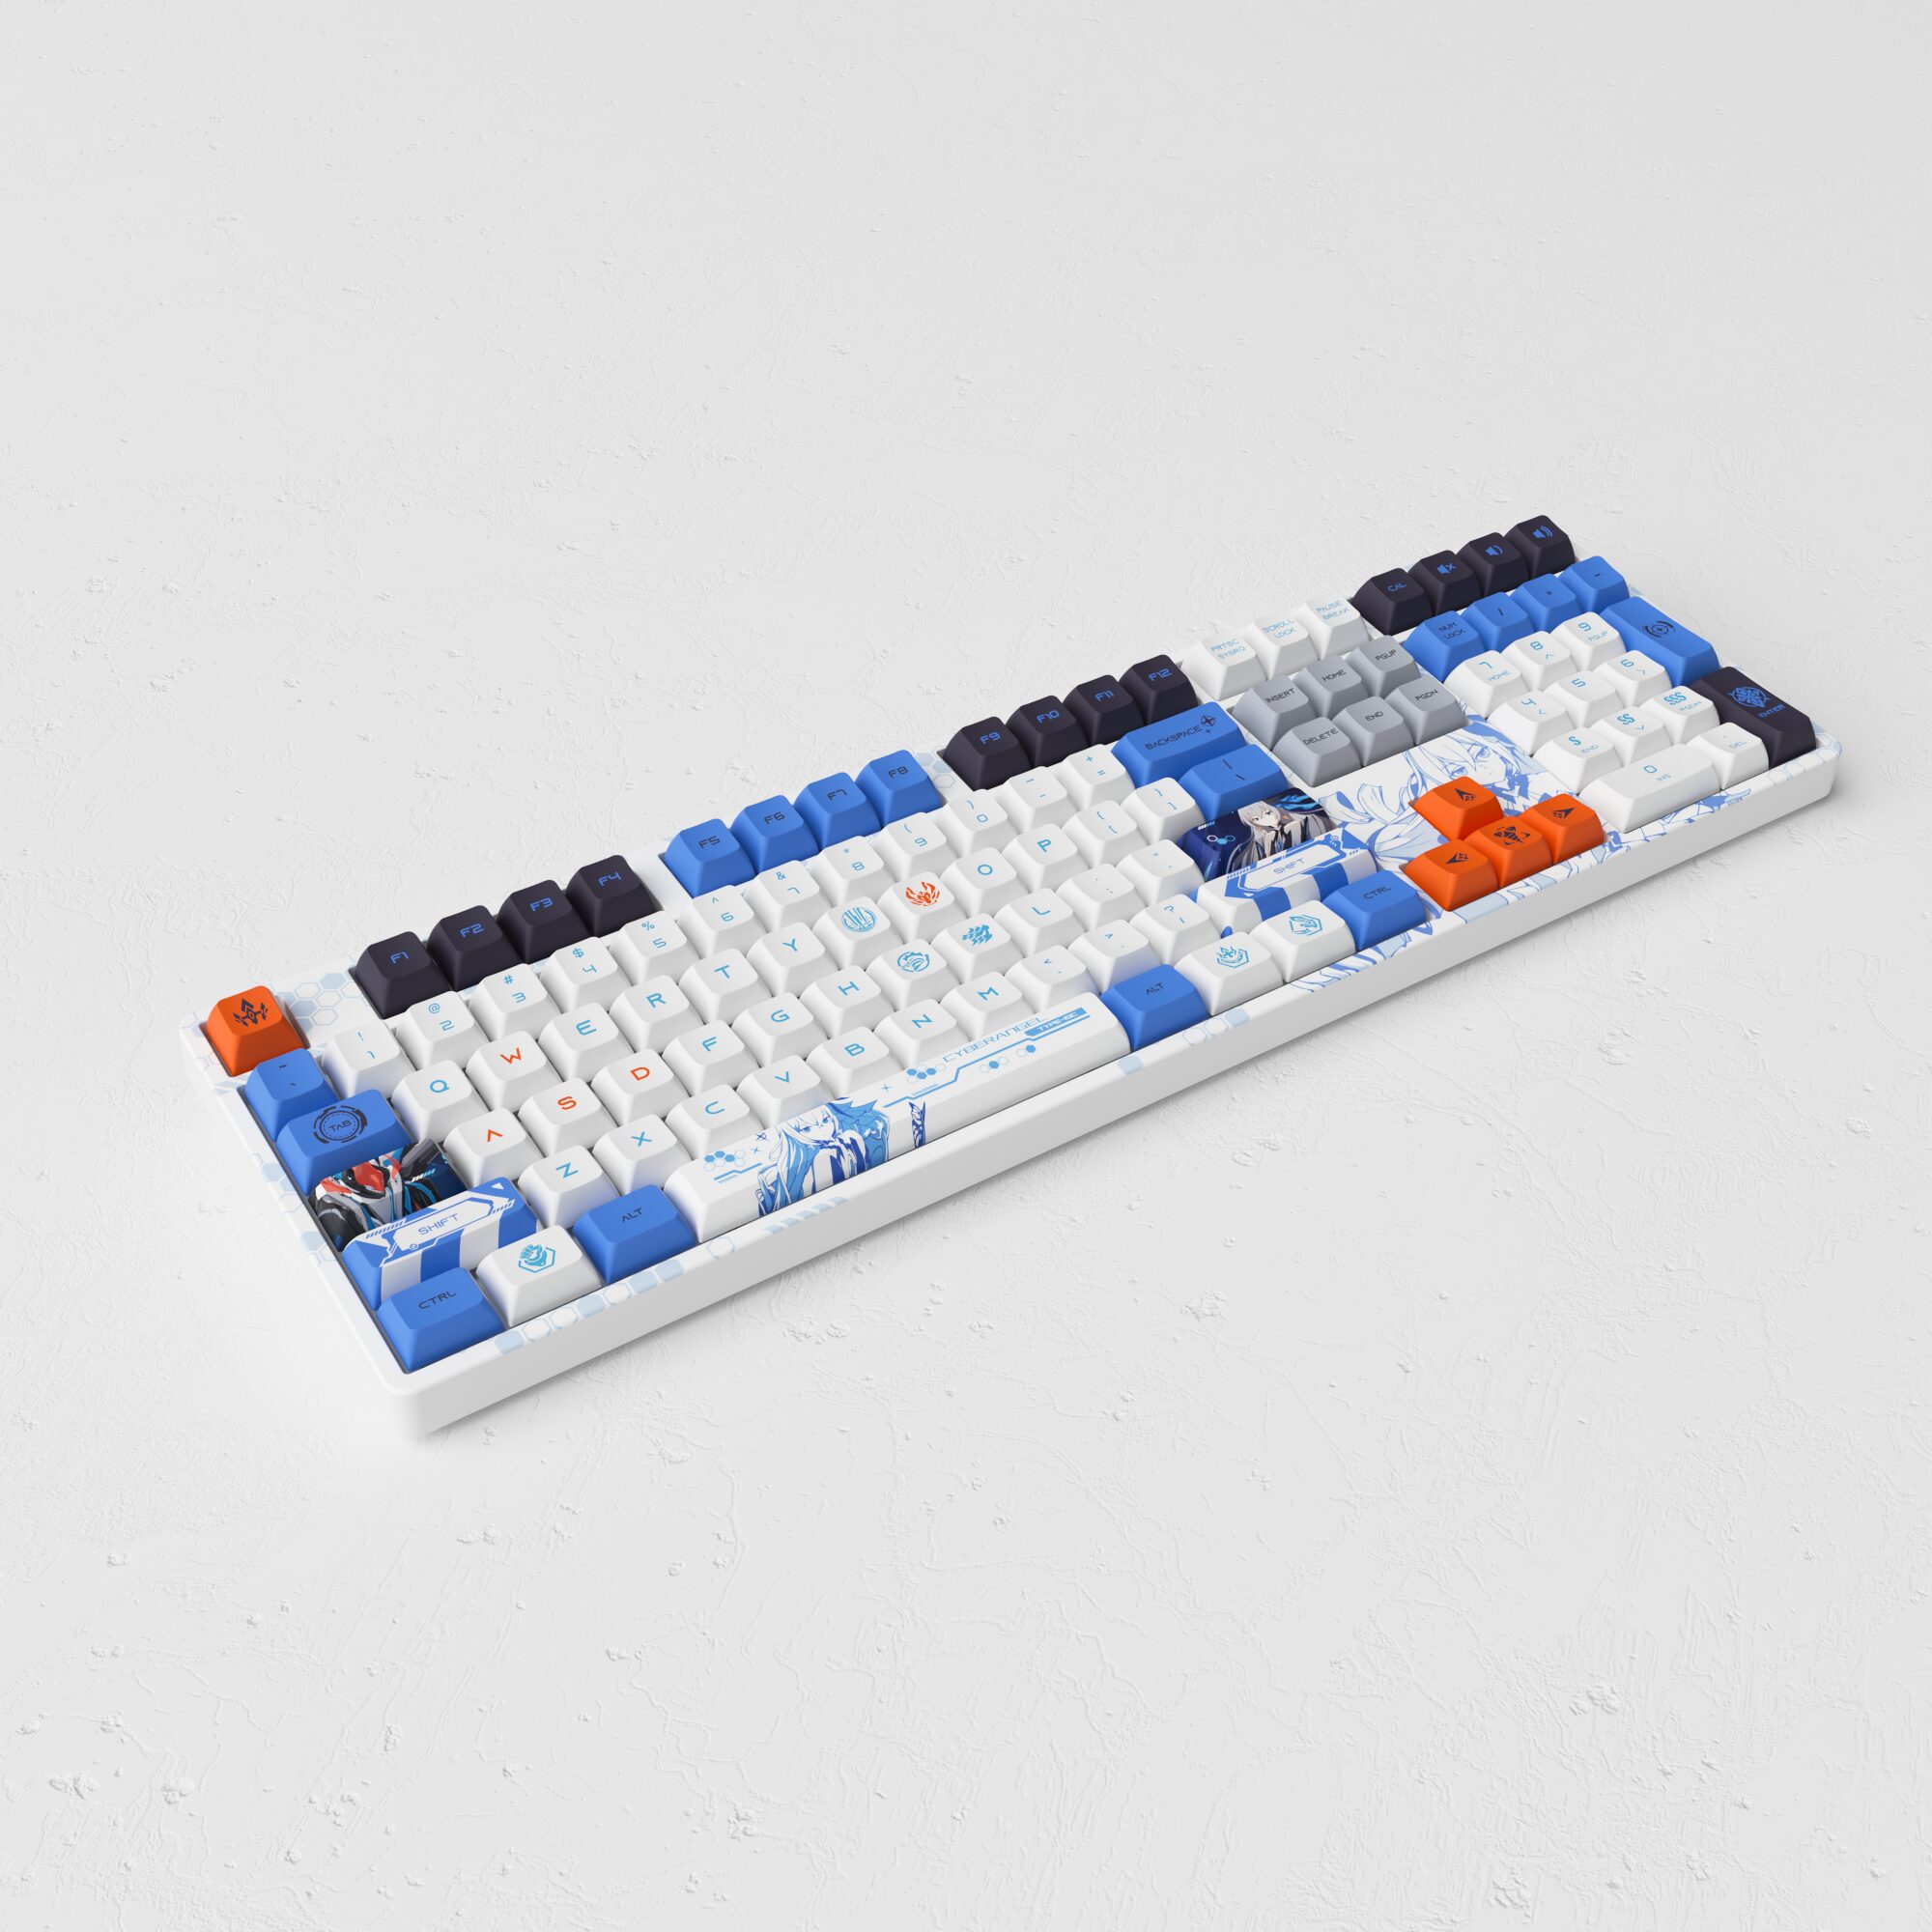 Akko 5108S BRONYA-ZAYCHIK Full-Size Wired Hot-Swap Mechanical Gaming Keyboard RGB Backlit 108-key JDA PBT Dye-Sub Keycaps